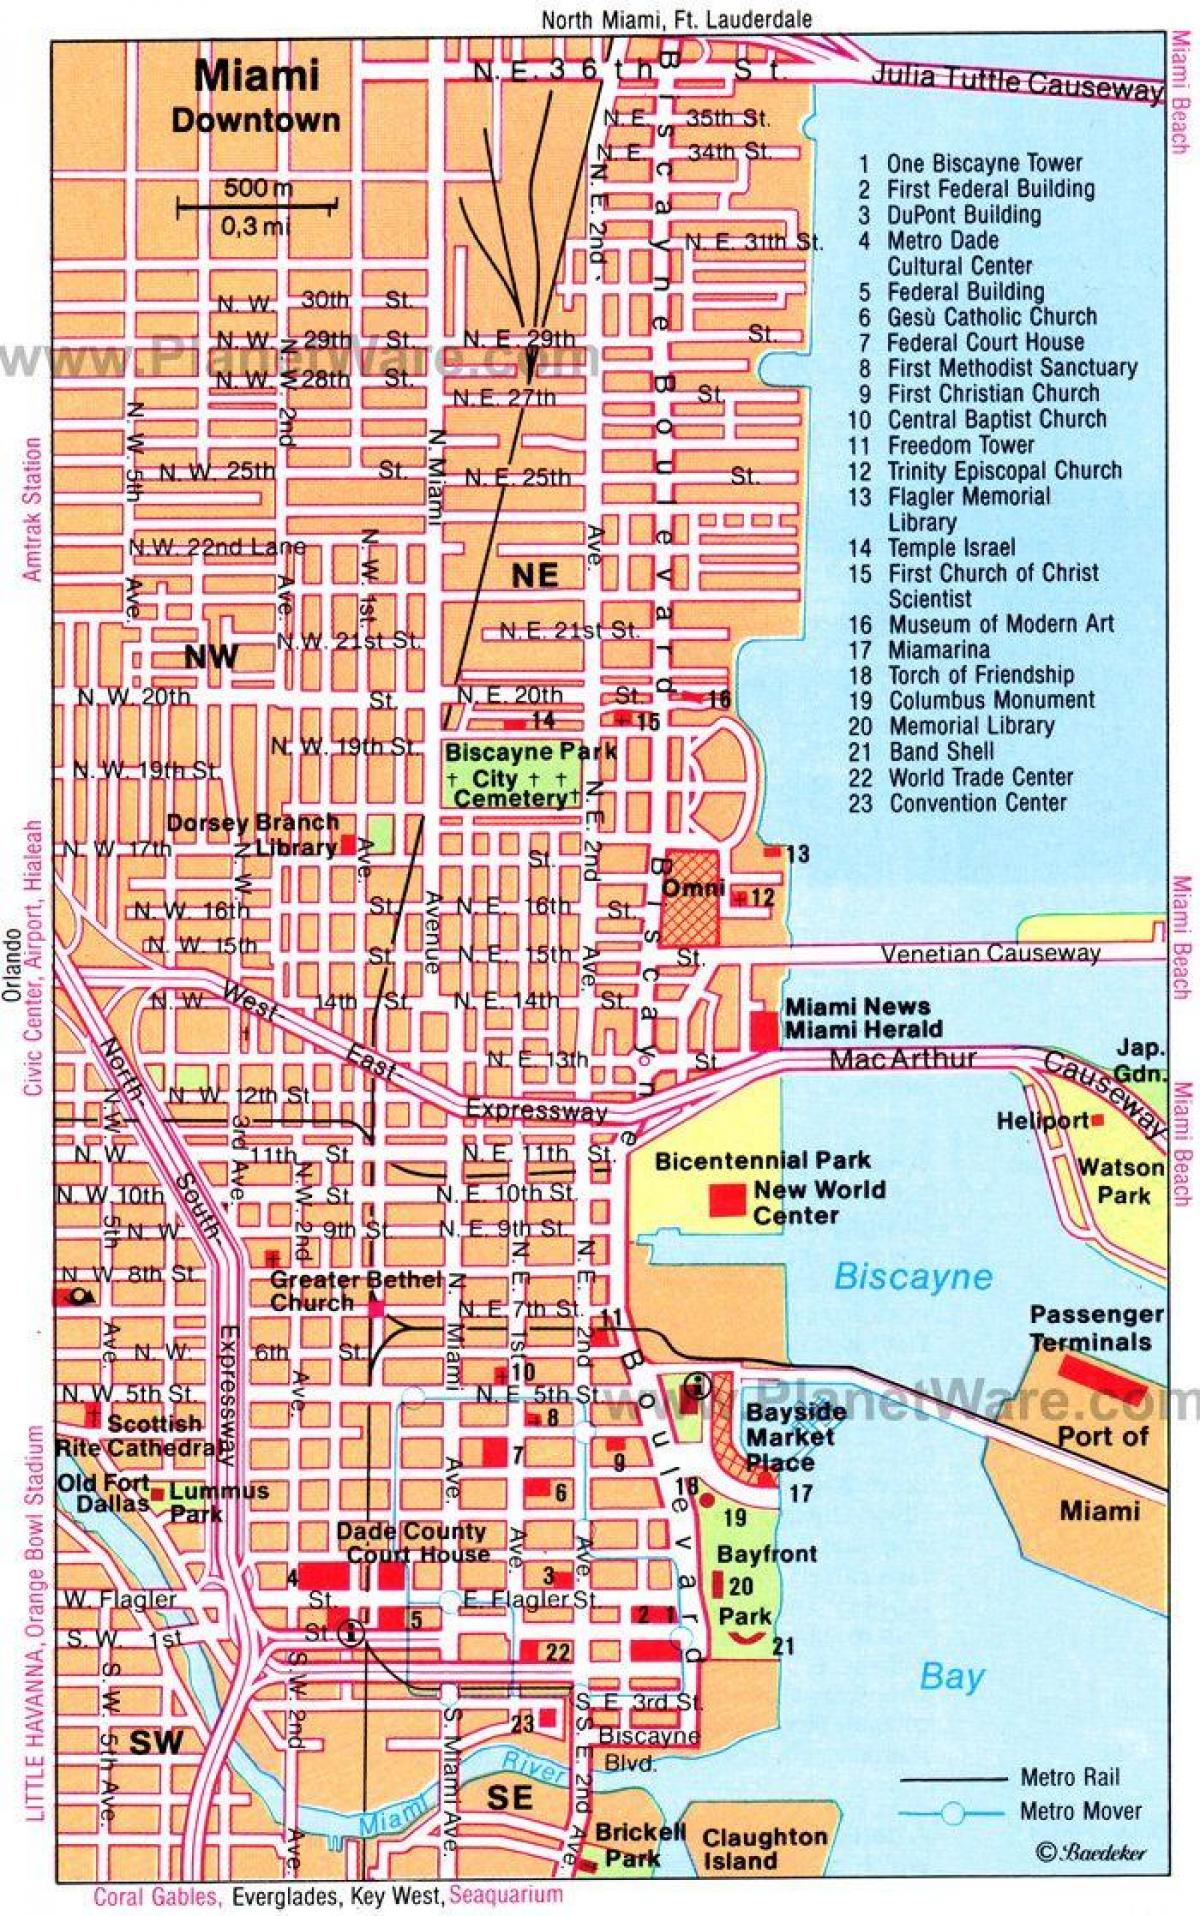 Miami walking tours map